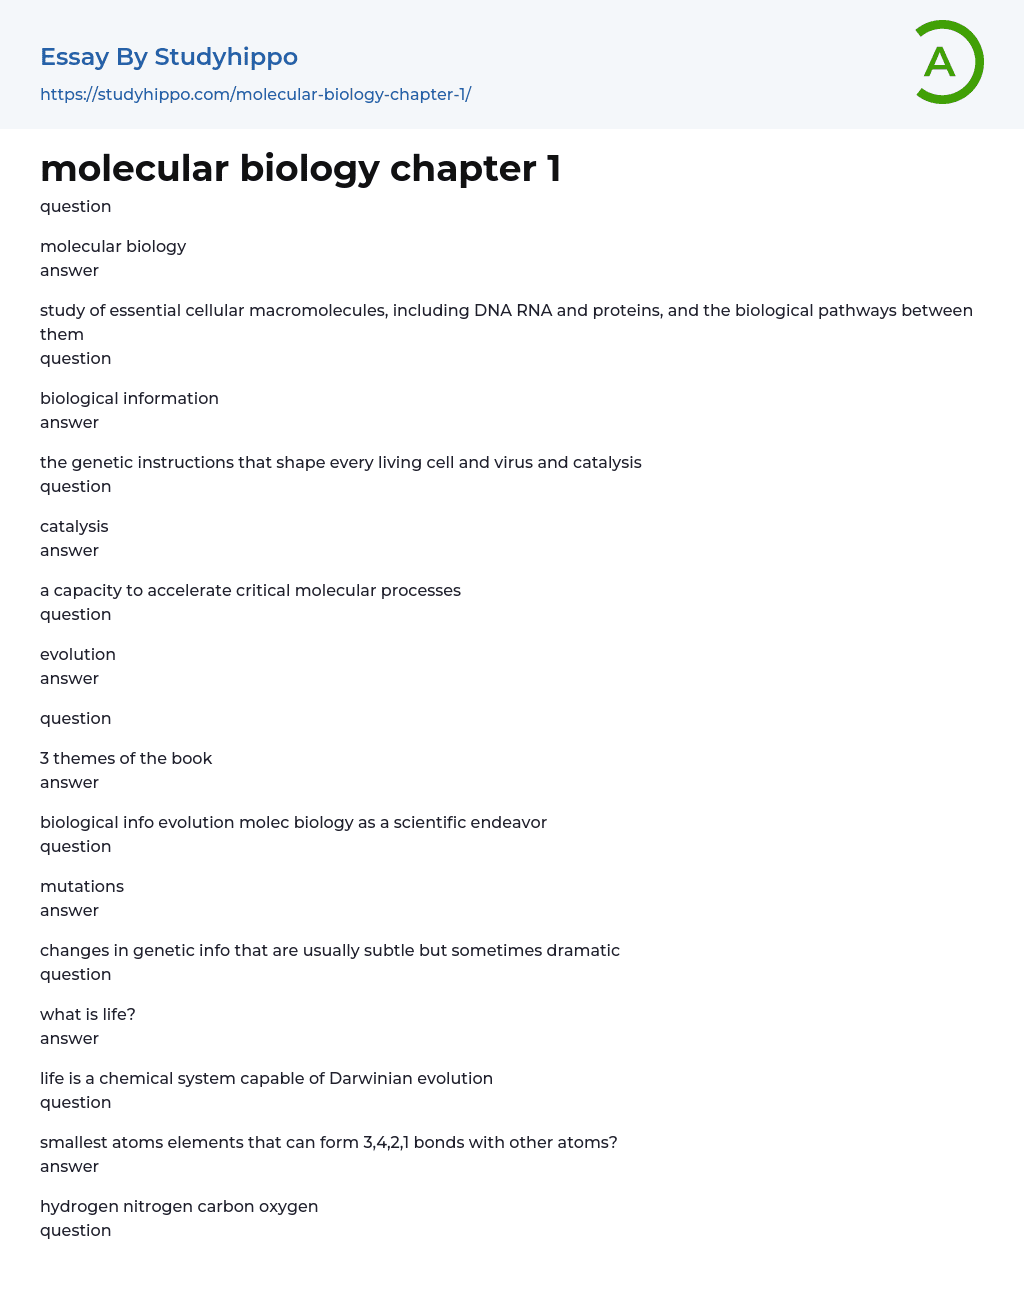 molecular biology chapter 1 Essay Example